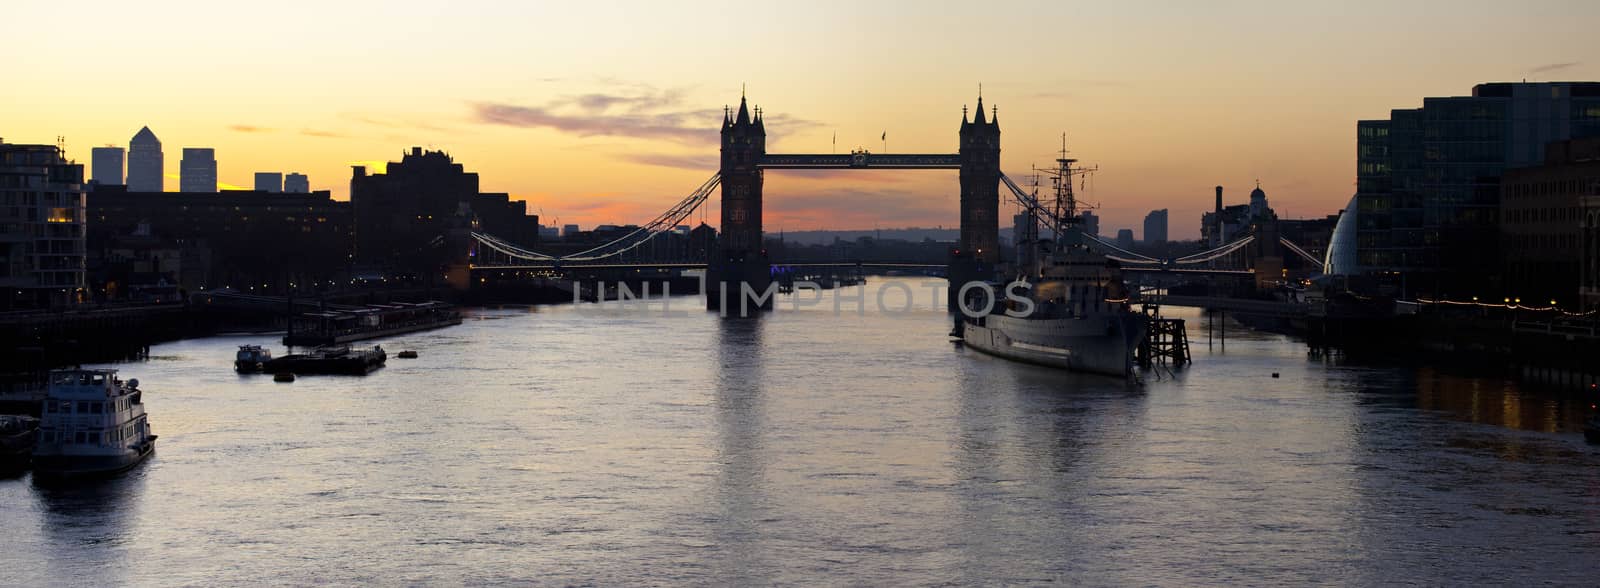 Tower Bridge and the River Thames Sunrise by chrisdorney